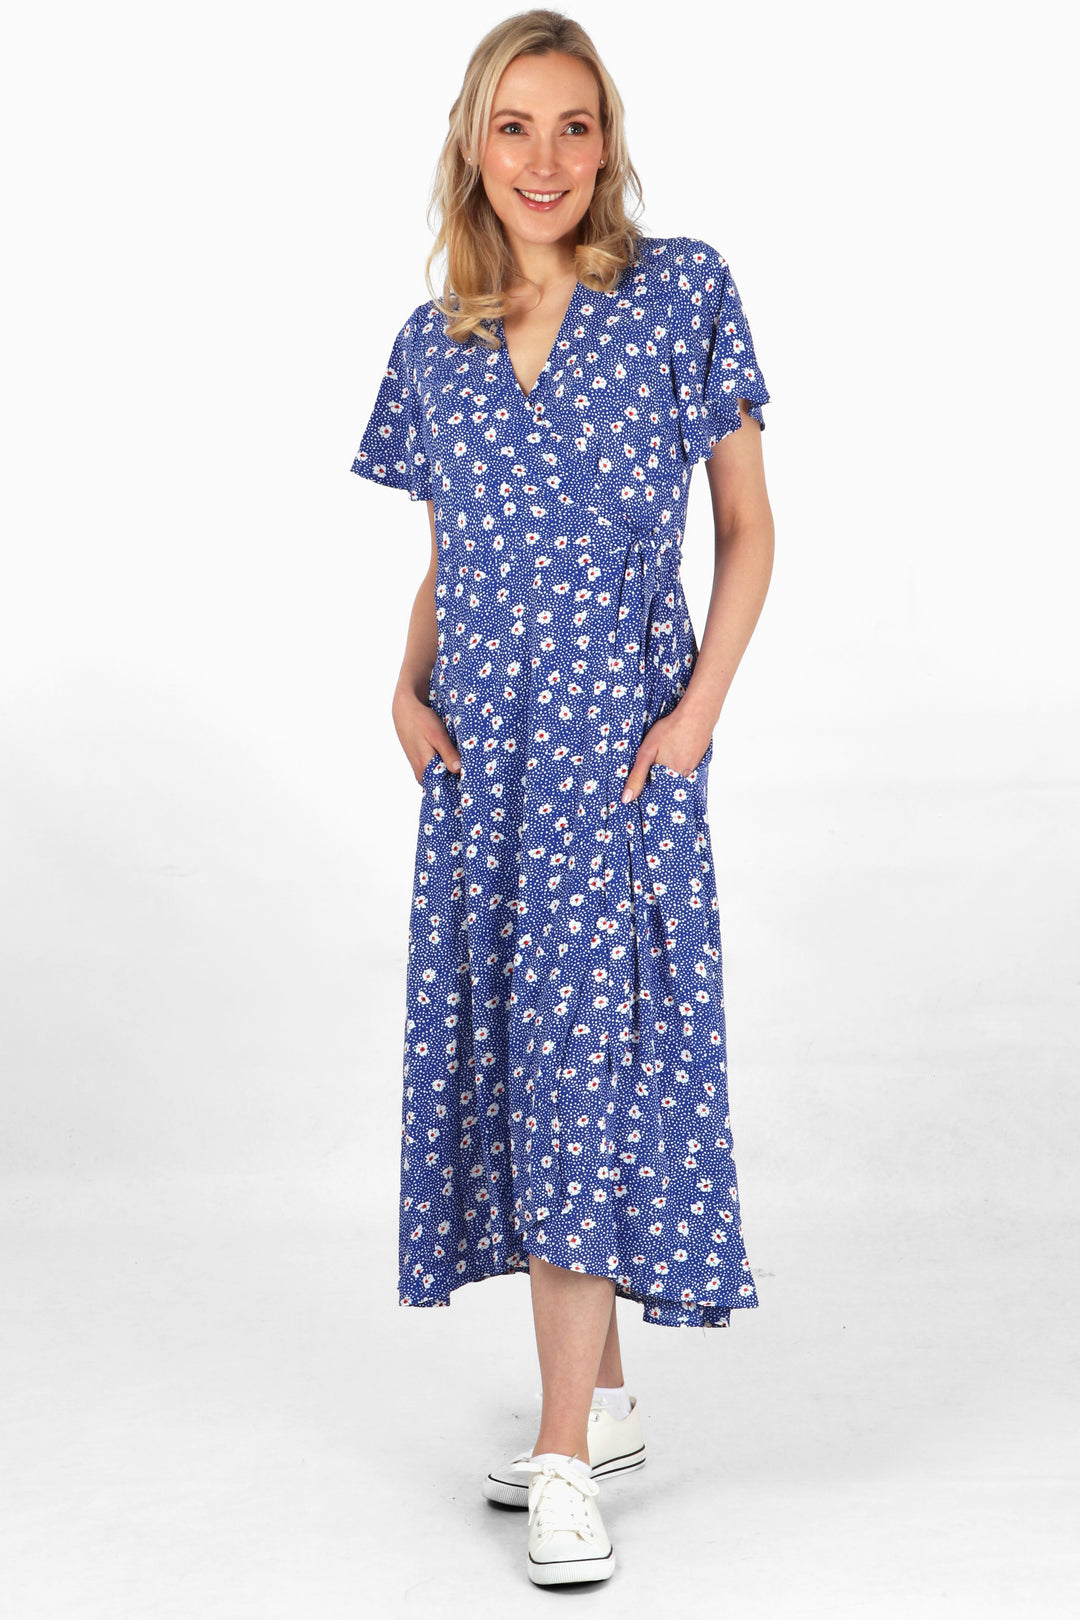 model wearing a blue daisy and spot print short sleeve wrap dress